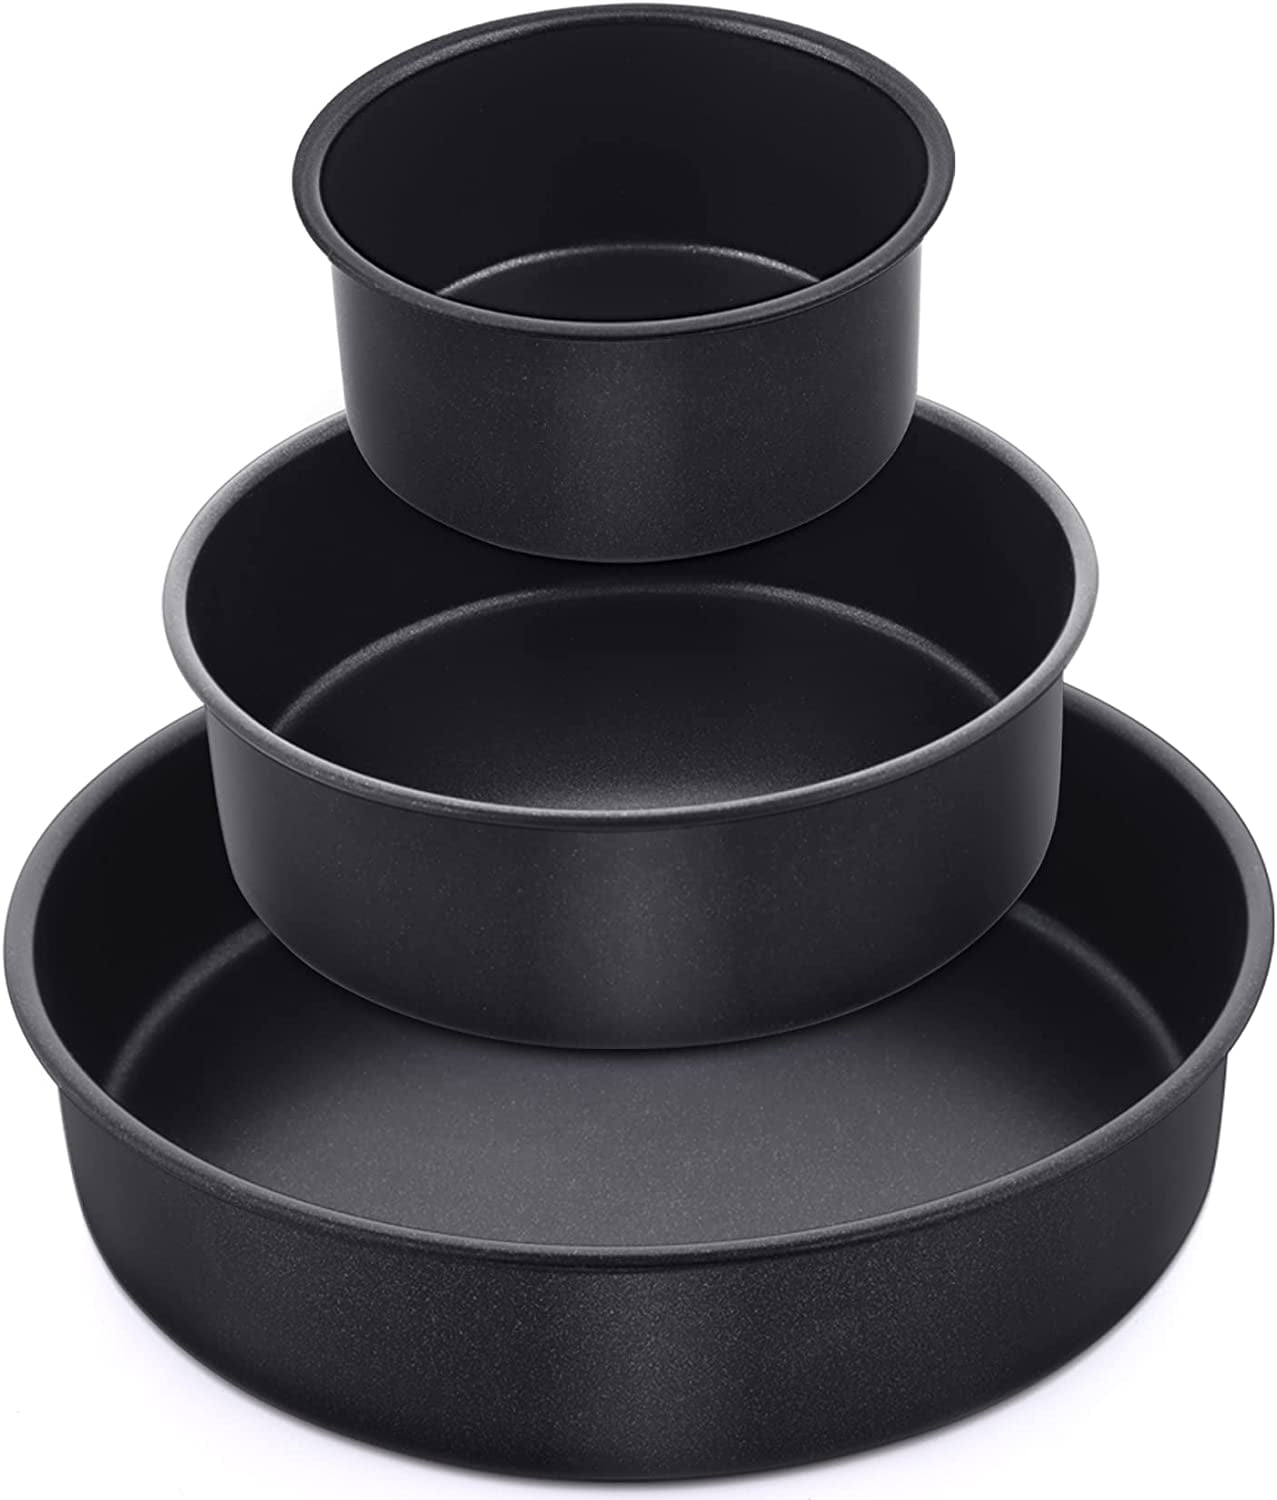 Herogo 6 x 3 Inch Cake Pans Round Set of 3, Stainless Steel Black